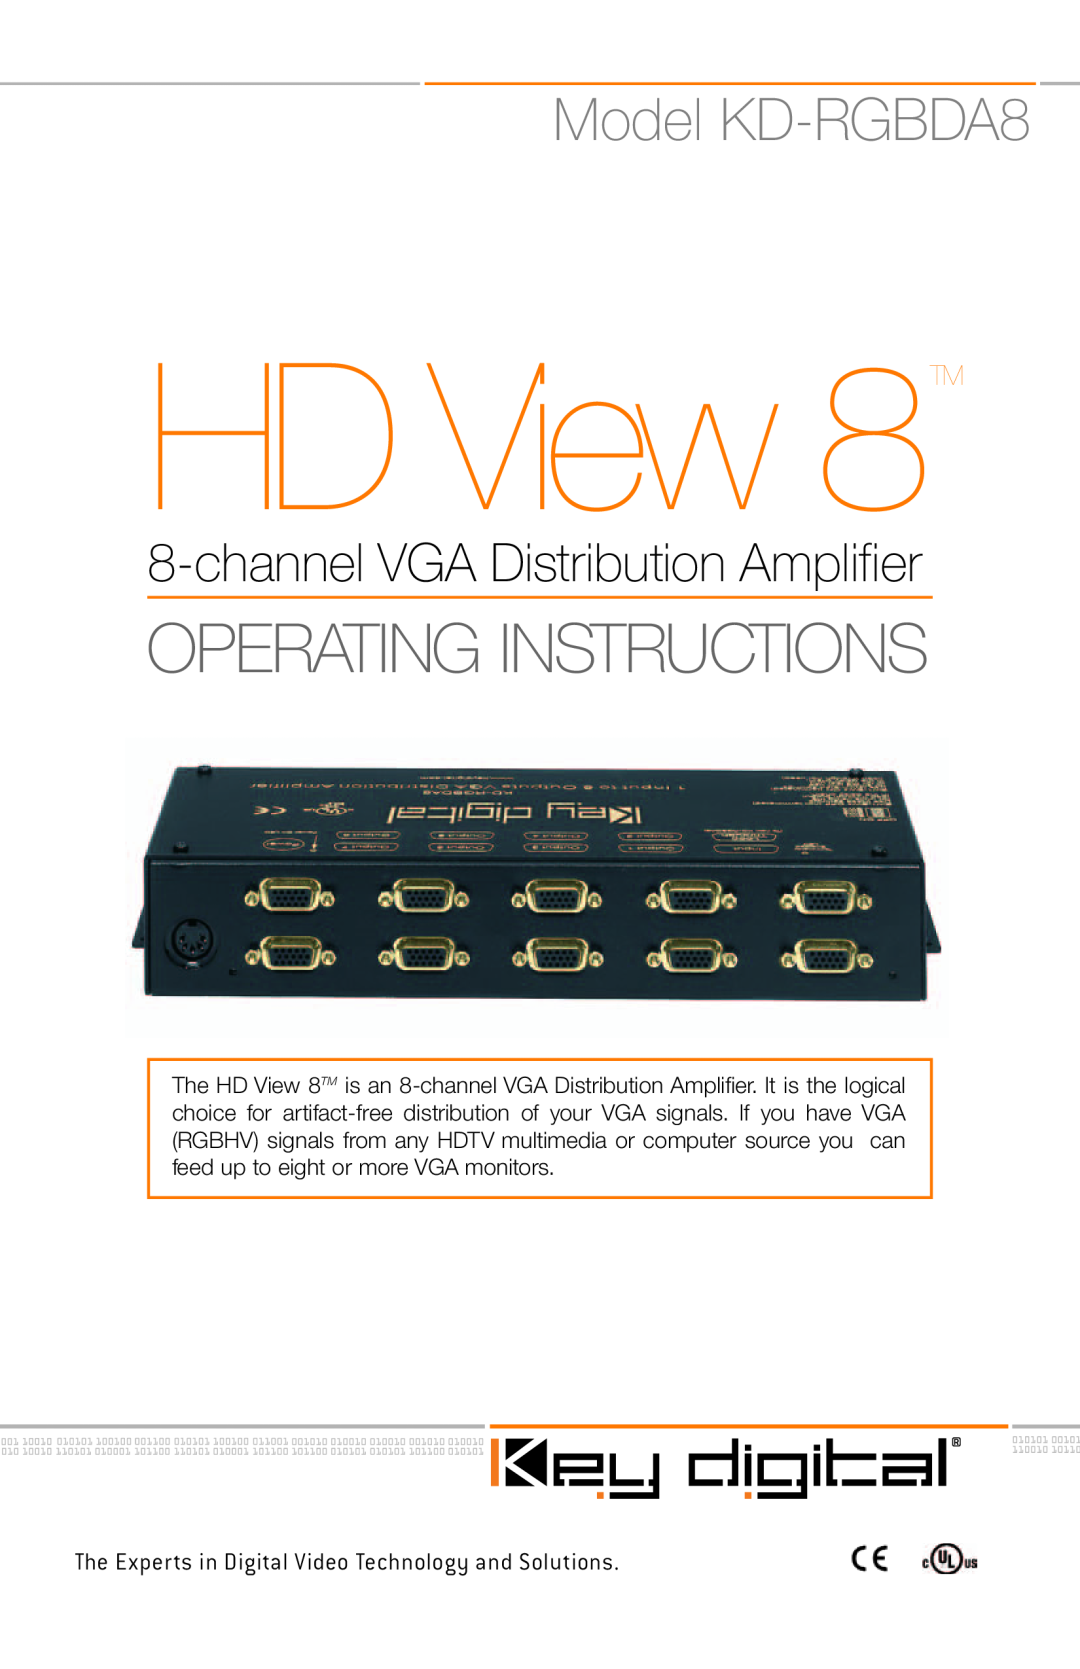 Key Digital manual HD View 8TM, Operating Instructions, Model KD-RGBDA8, channelVGA Distribution Amplifier 